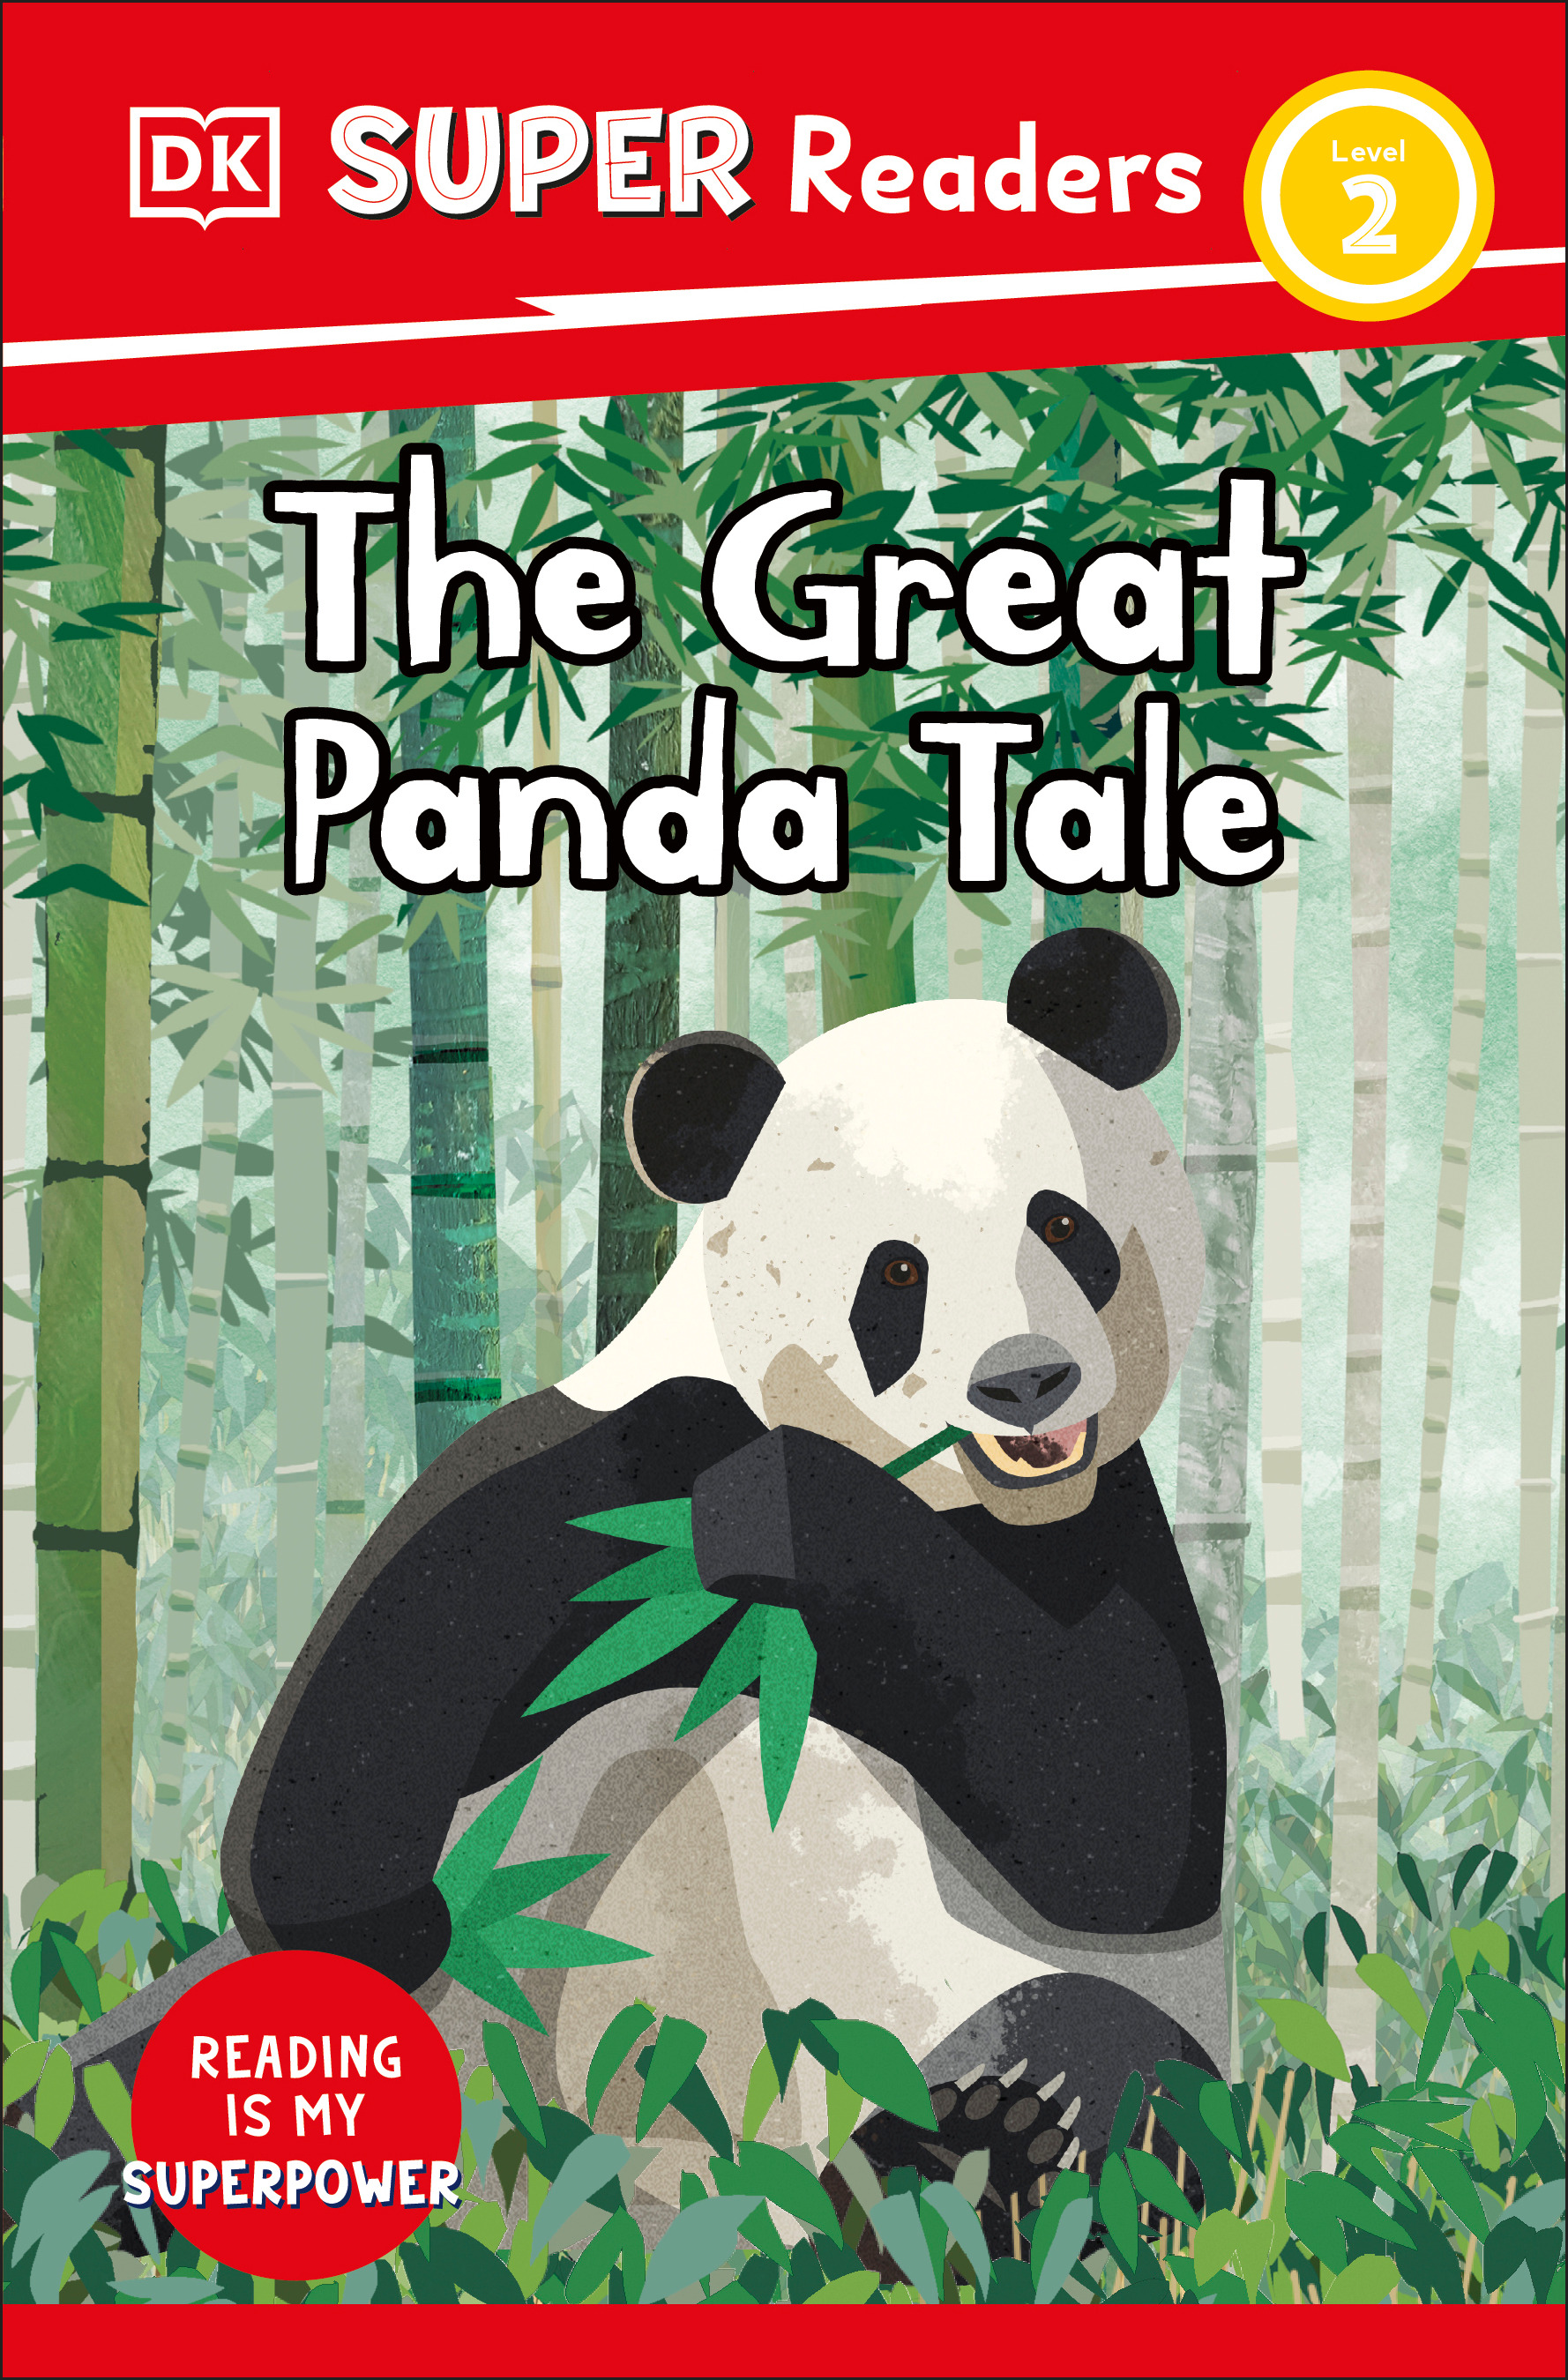 DK Super Readers Level 2 - The Great Panda Tale | 